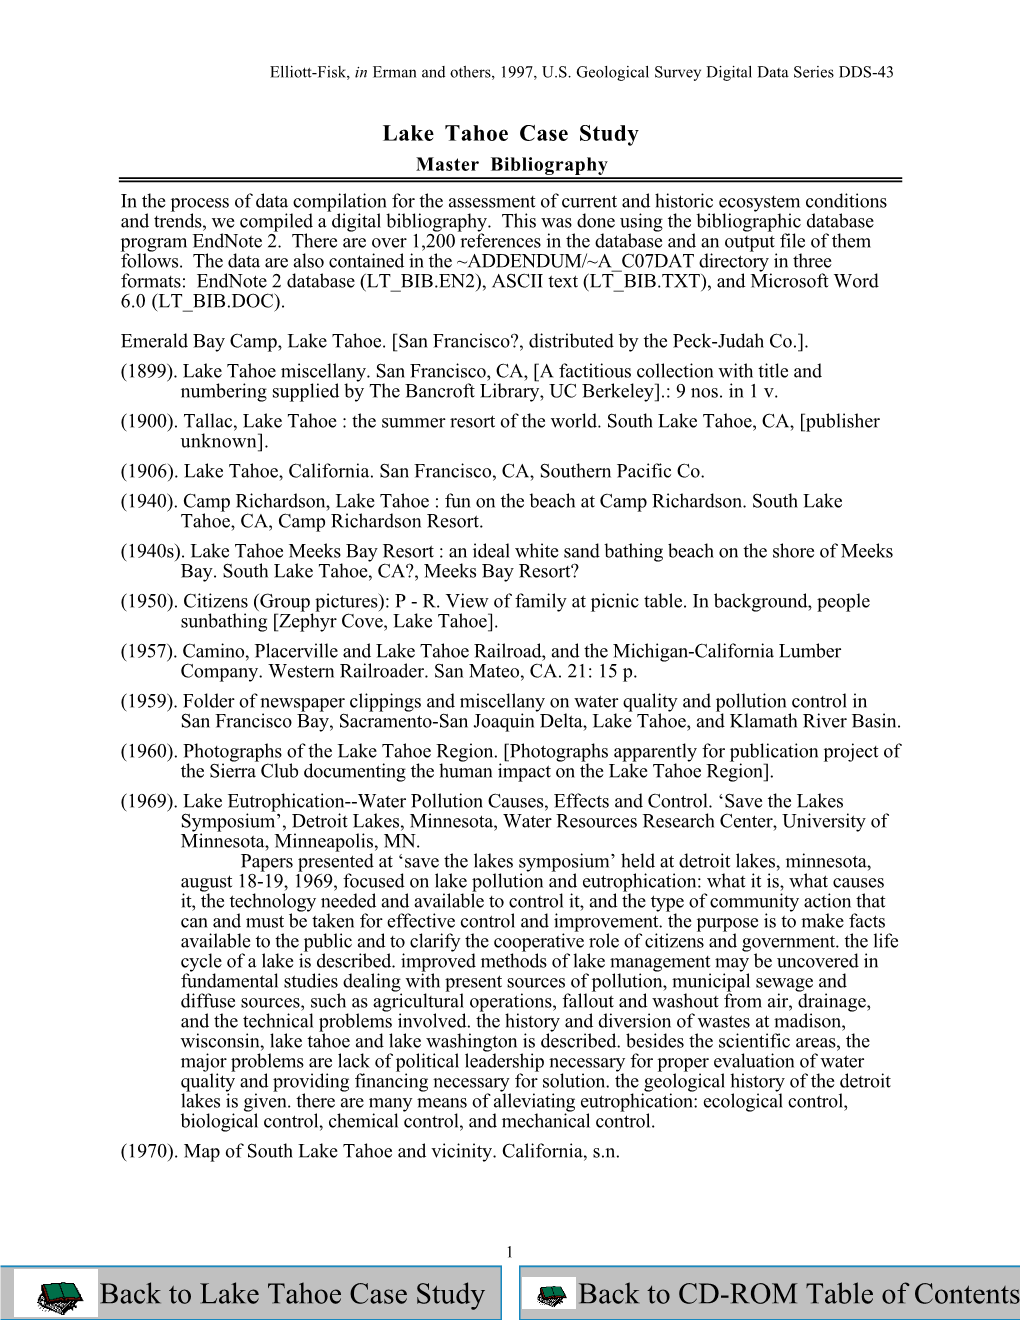 USGS DDS-43, Lake Tahoe Case Study, Master Bibliography